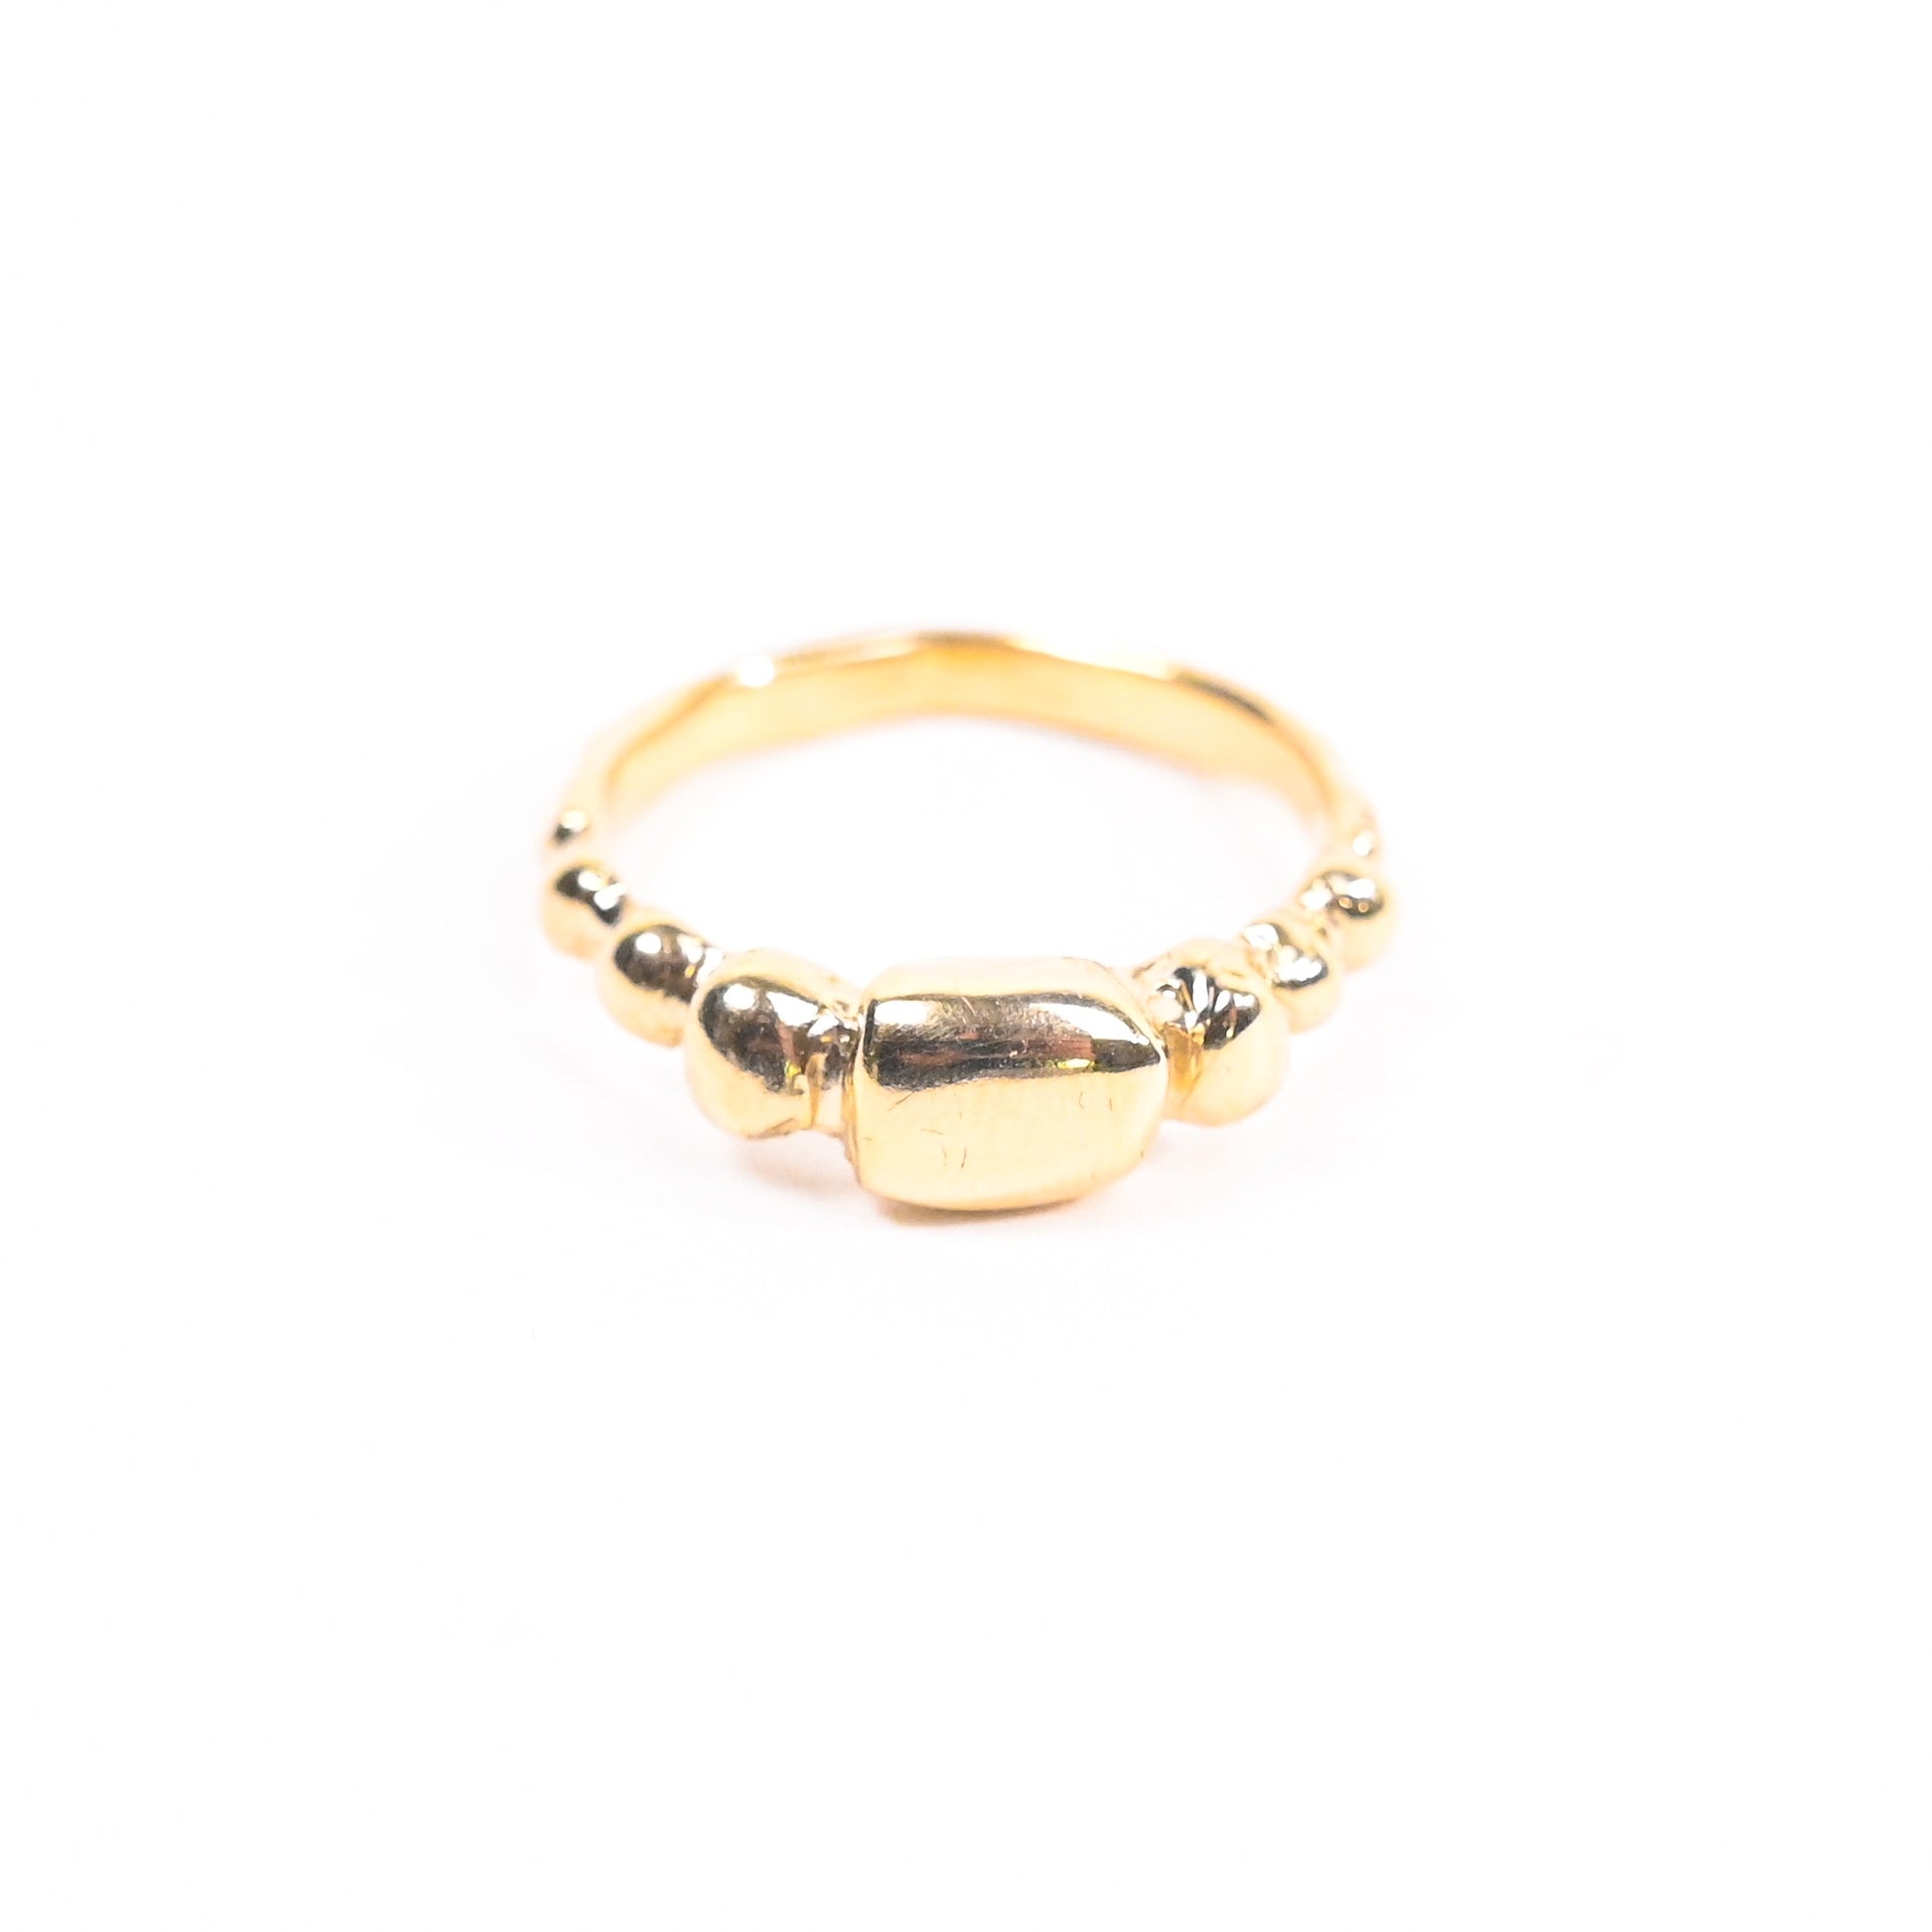 Studio Zali 'Byzan Oblong' 9ct Gold Ring